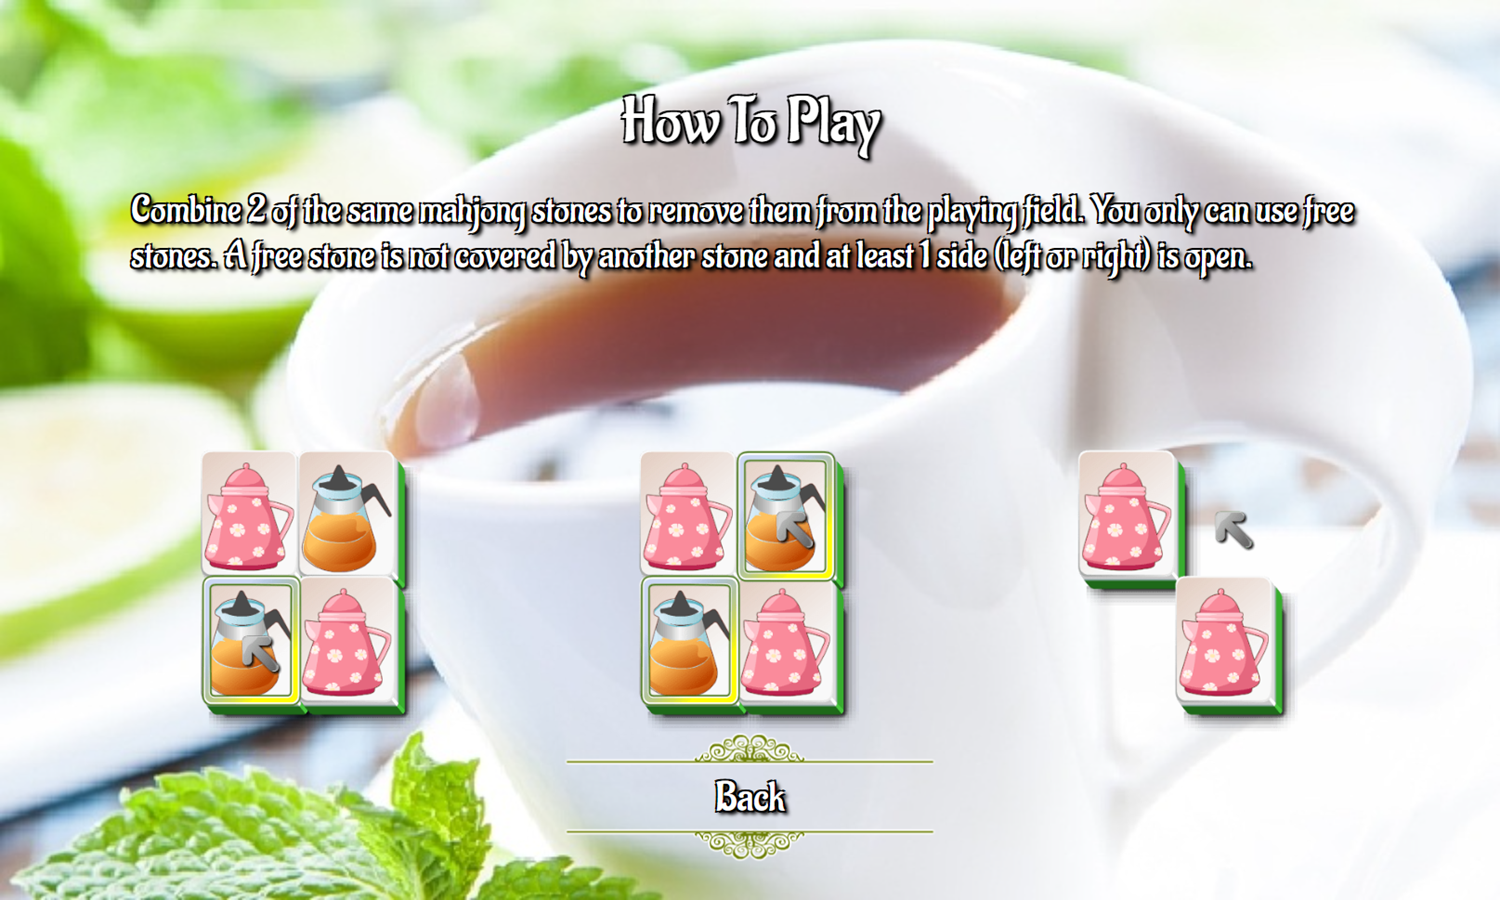 Cup of Tea Mahjong Game How To Play Screenshot.